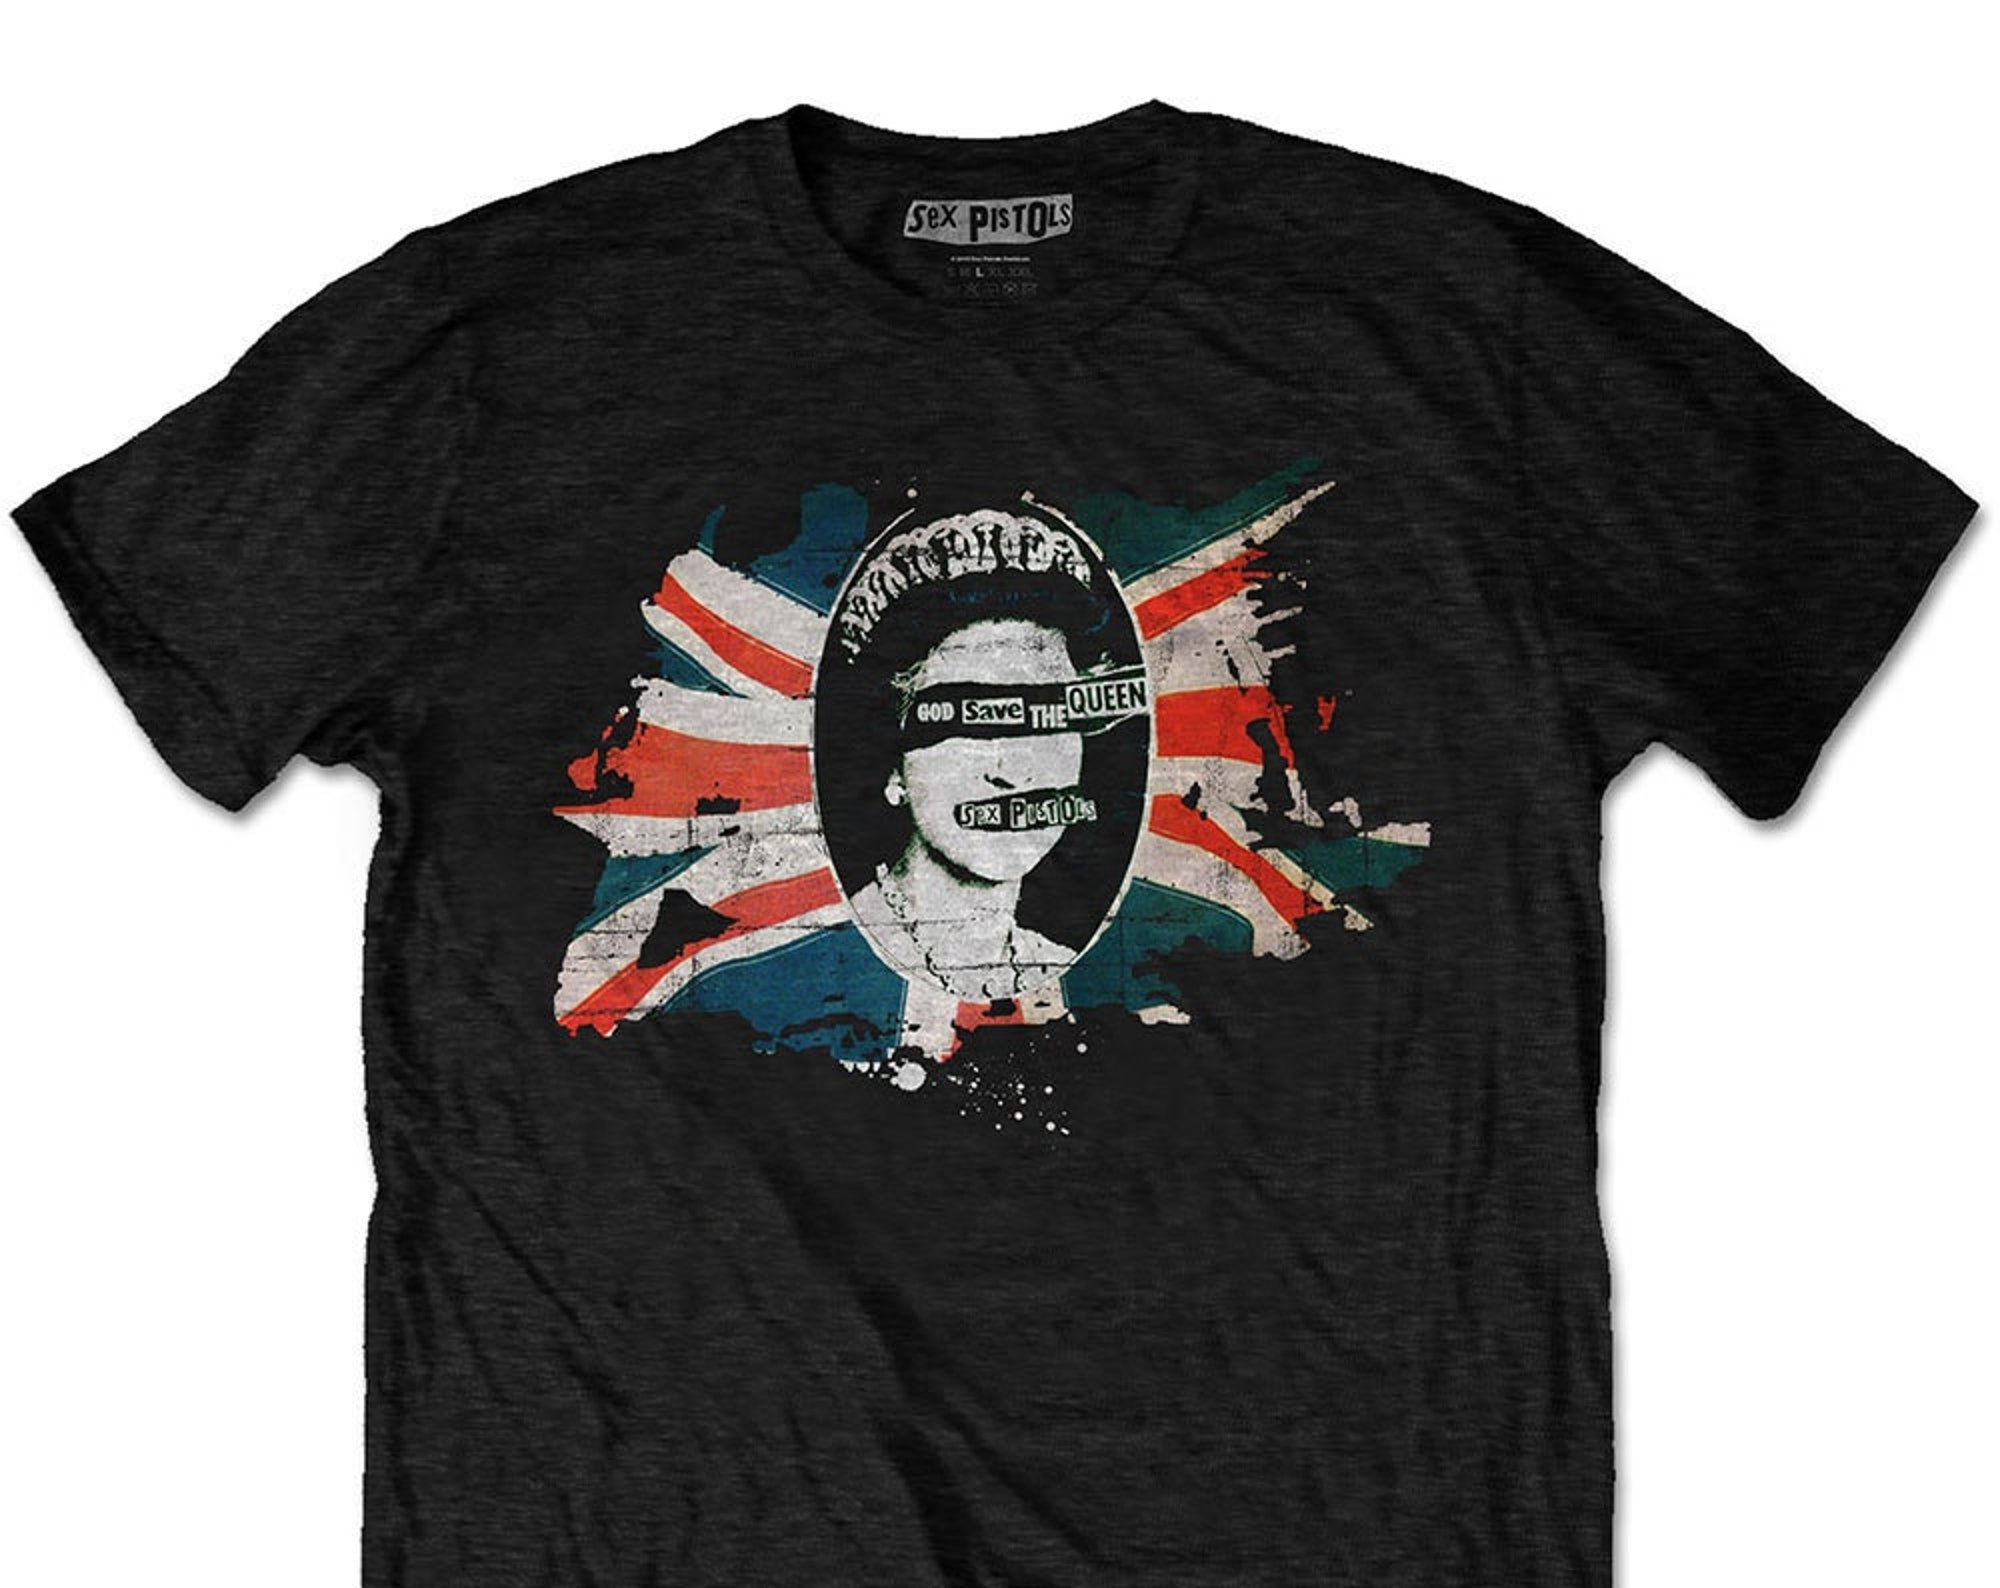 Discover The sx Pistols T-Shirt -God Save the Queen Flag Black Design - Unisex Official Licensed Design